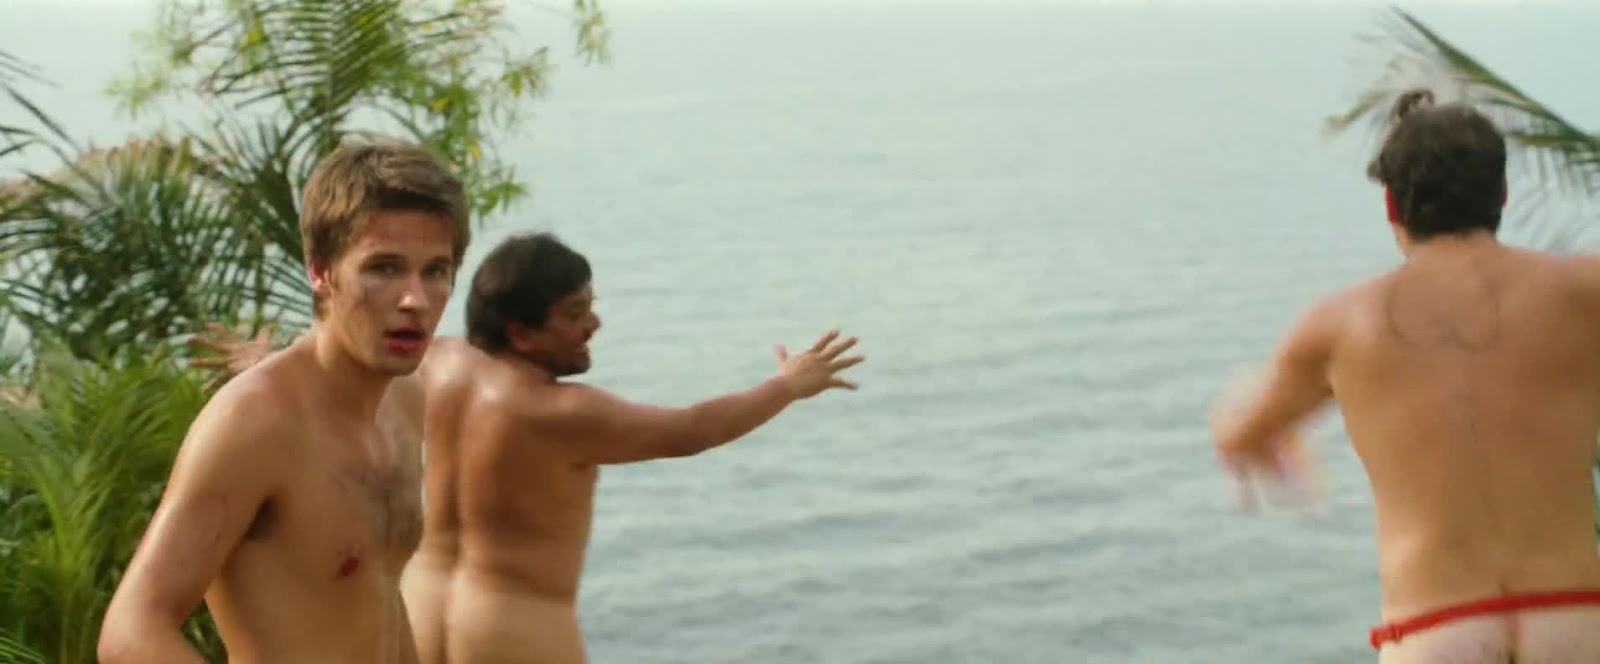 Devon Werkheiser - Shirtless, Barefoot & Naked in "Sundown" .